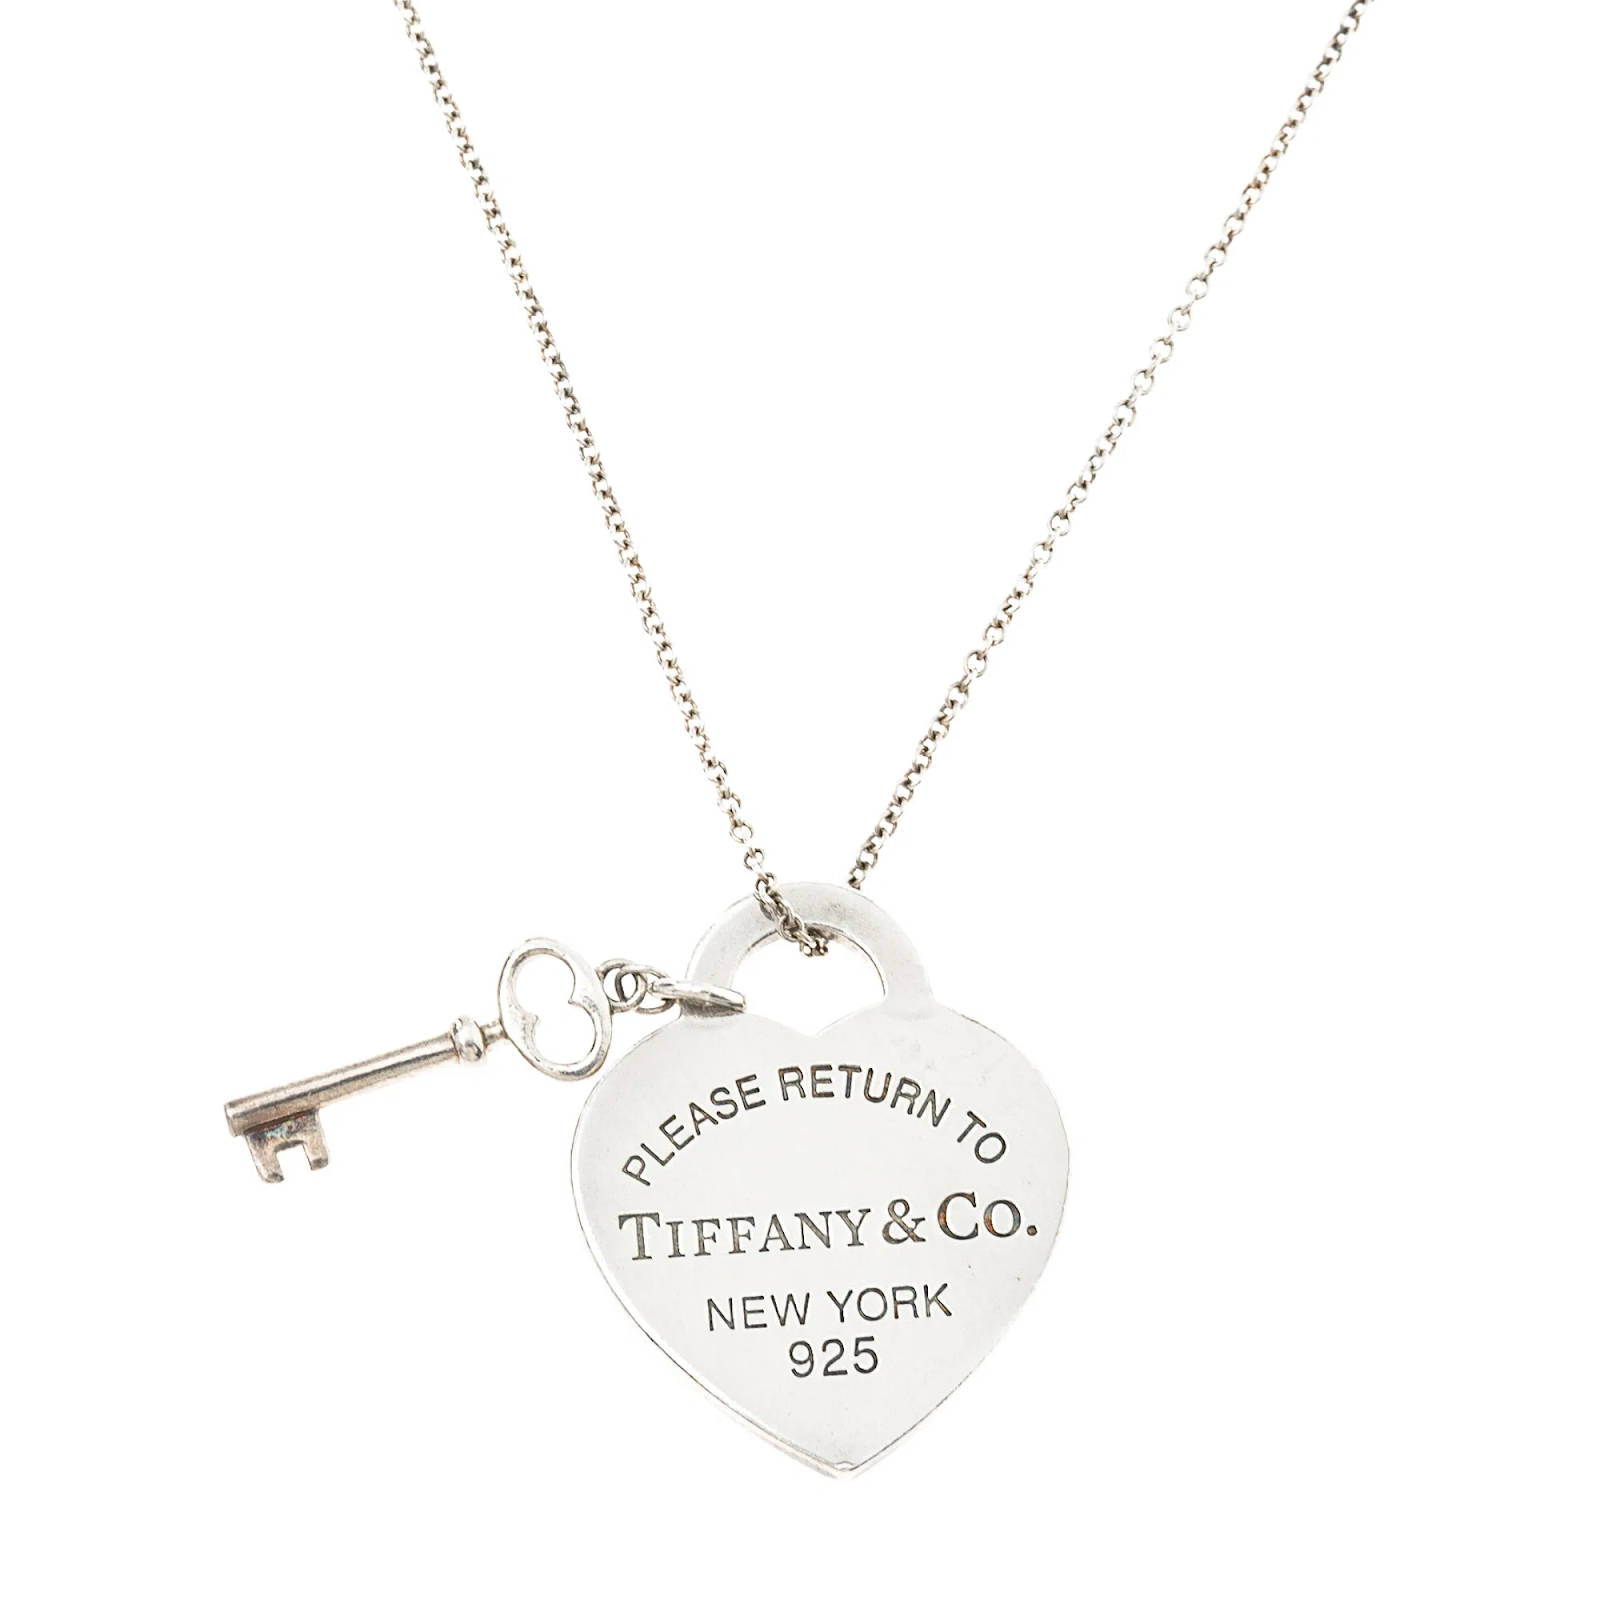 Confira como identificar joias autênticas da Tiffany